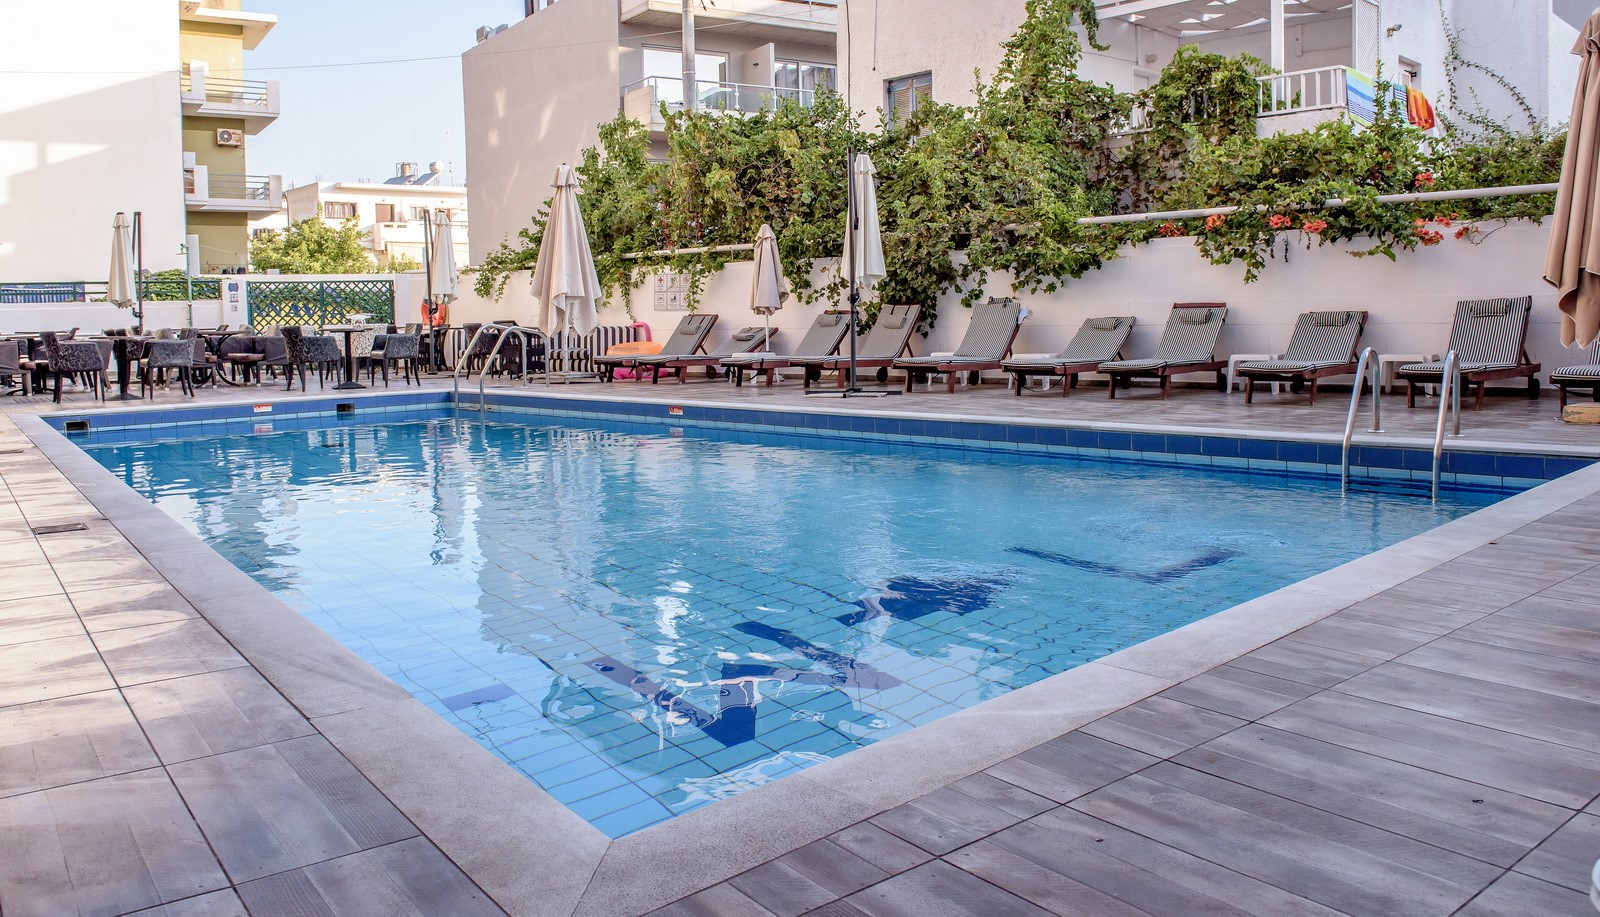 Pela Maria Hotel - Χερσόνησος, Κρήτη ✦ 2 Ημέρες (1 Διανυκτέρευση) ✦ 2 άτομα ✦ 12 ✦ 15/04/2023 έως 30/09/2023 ✦ Υπέροχη Τοποθεσία!